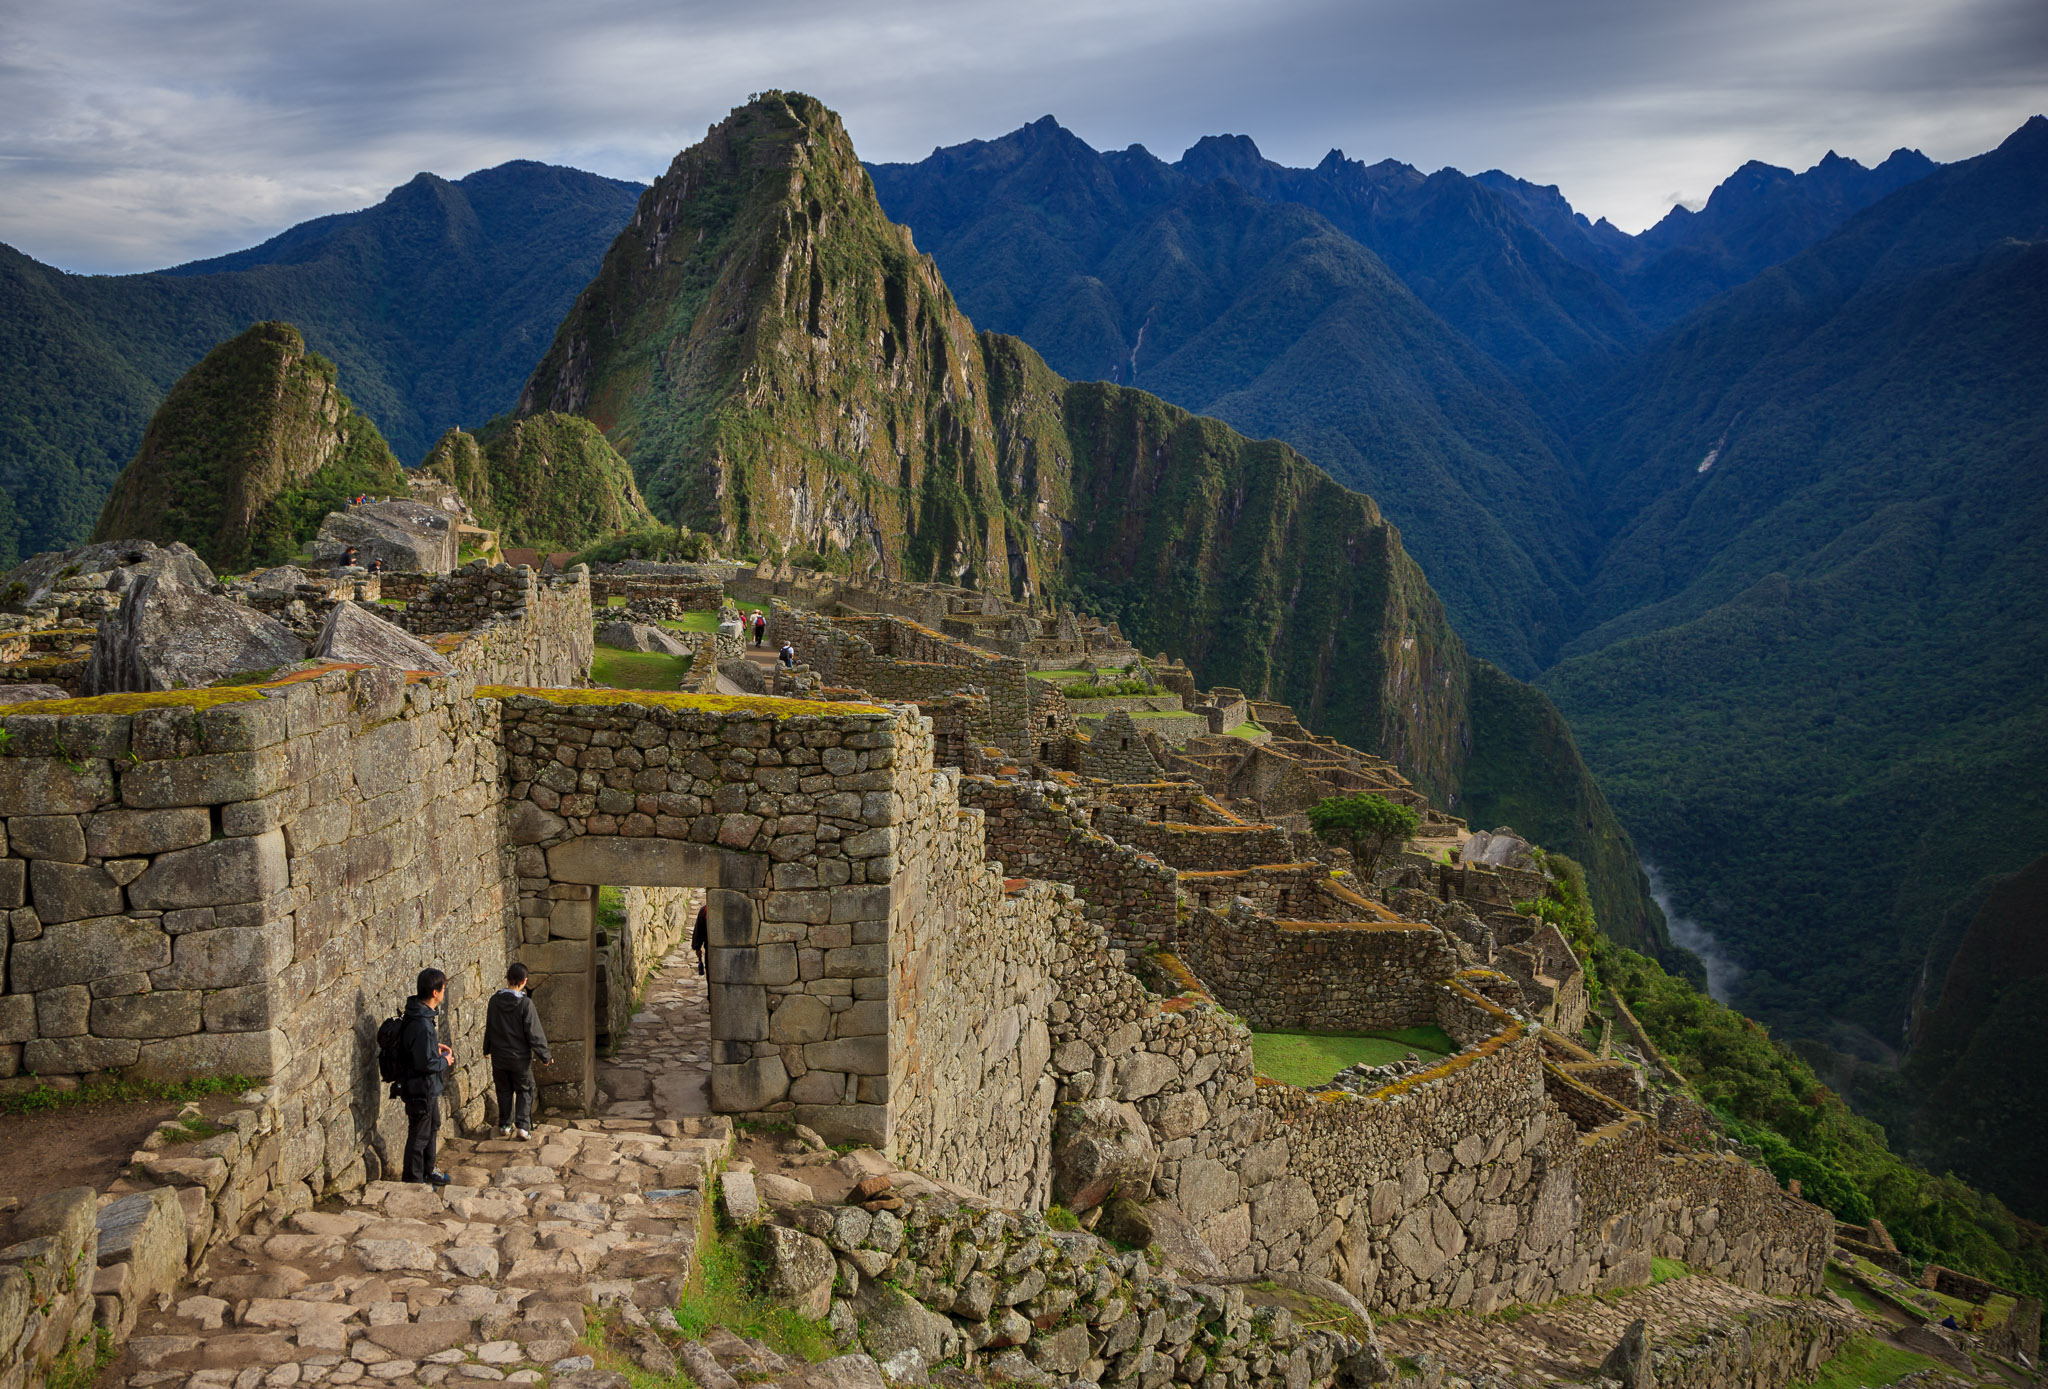 Entrance to Machu Picchu's royal sector